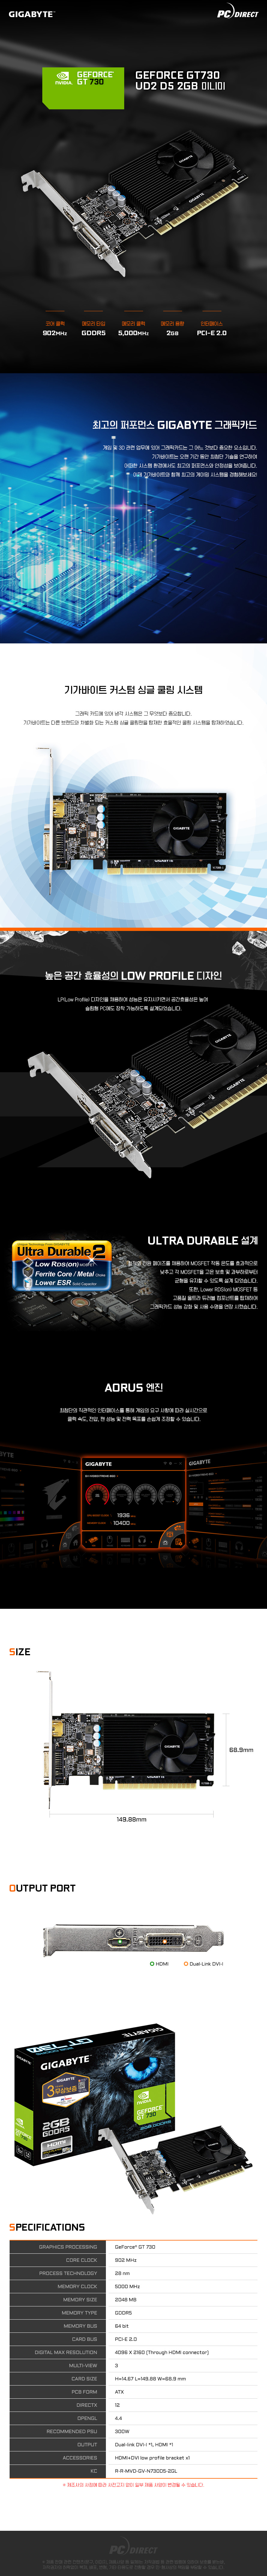 GeForce GT730 UD2 D5 2GB 미니미.jpg